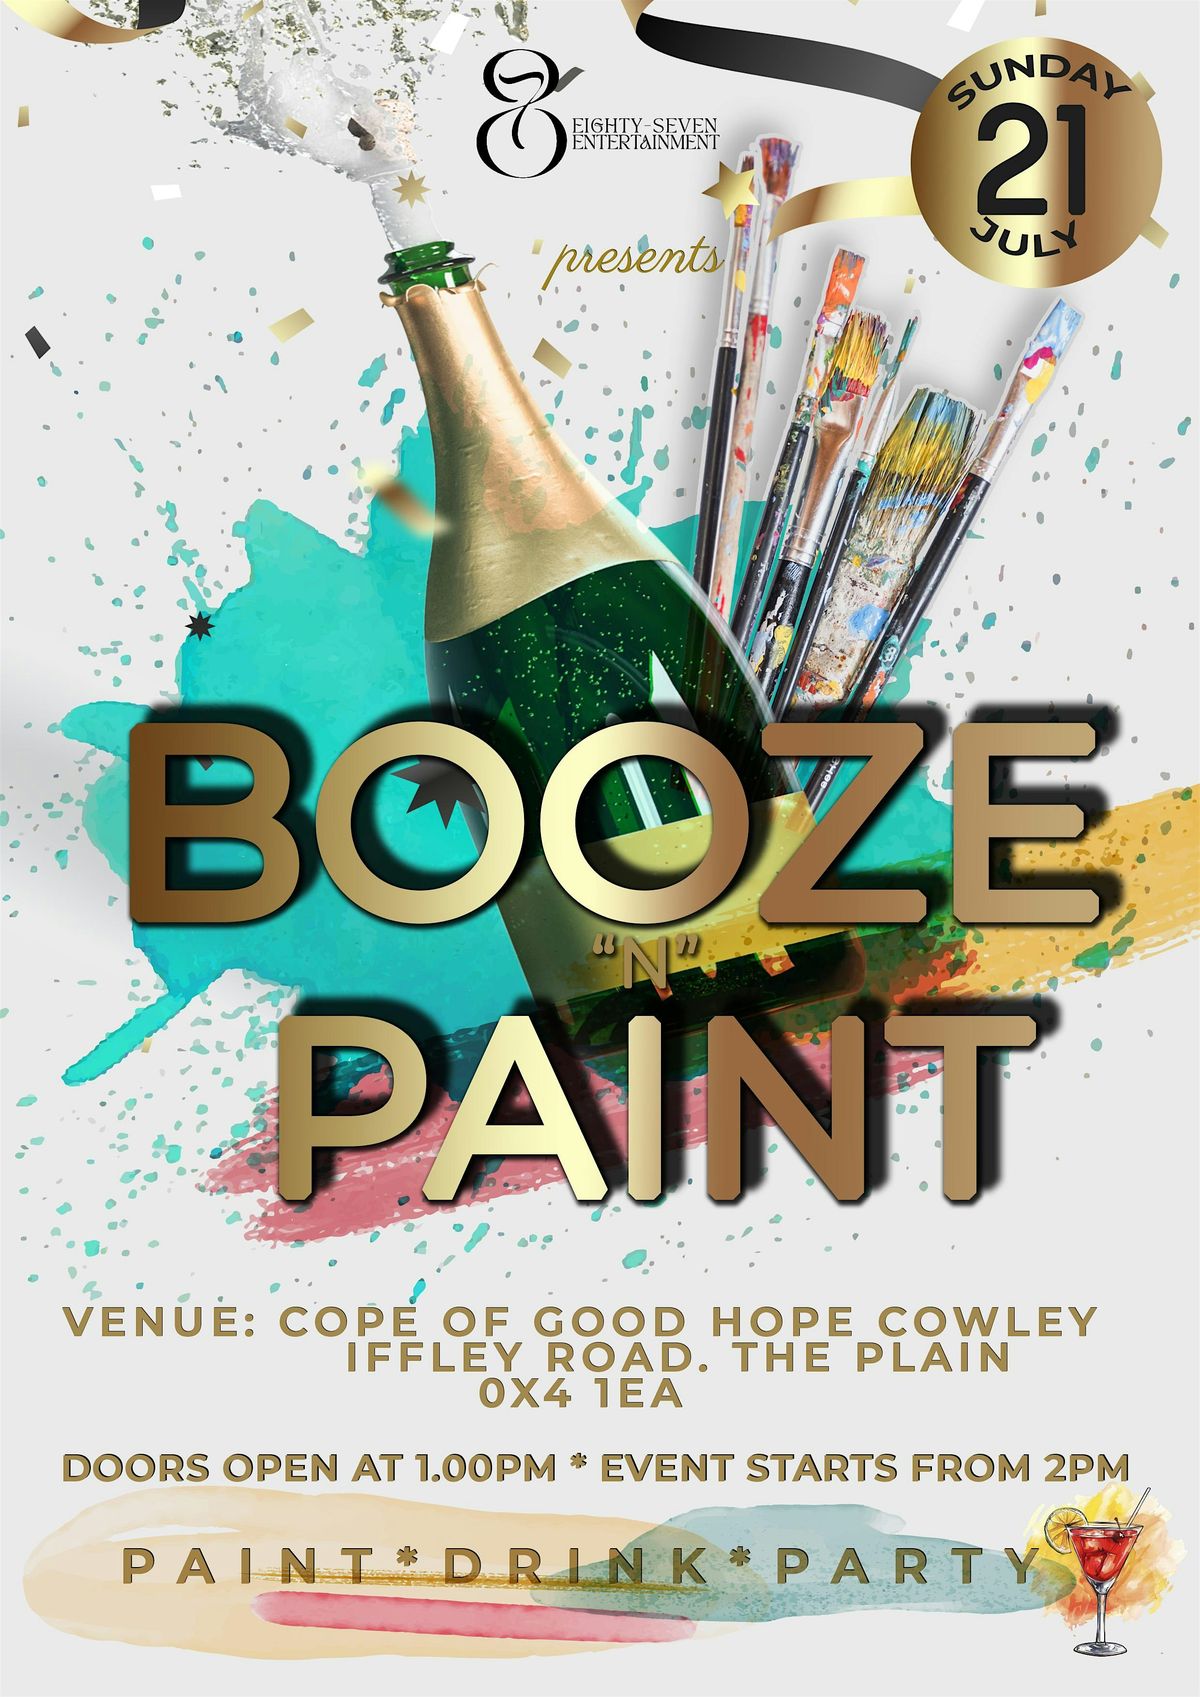 Booze & Paint